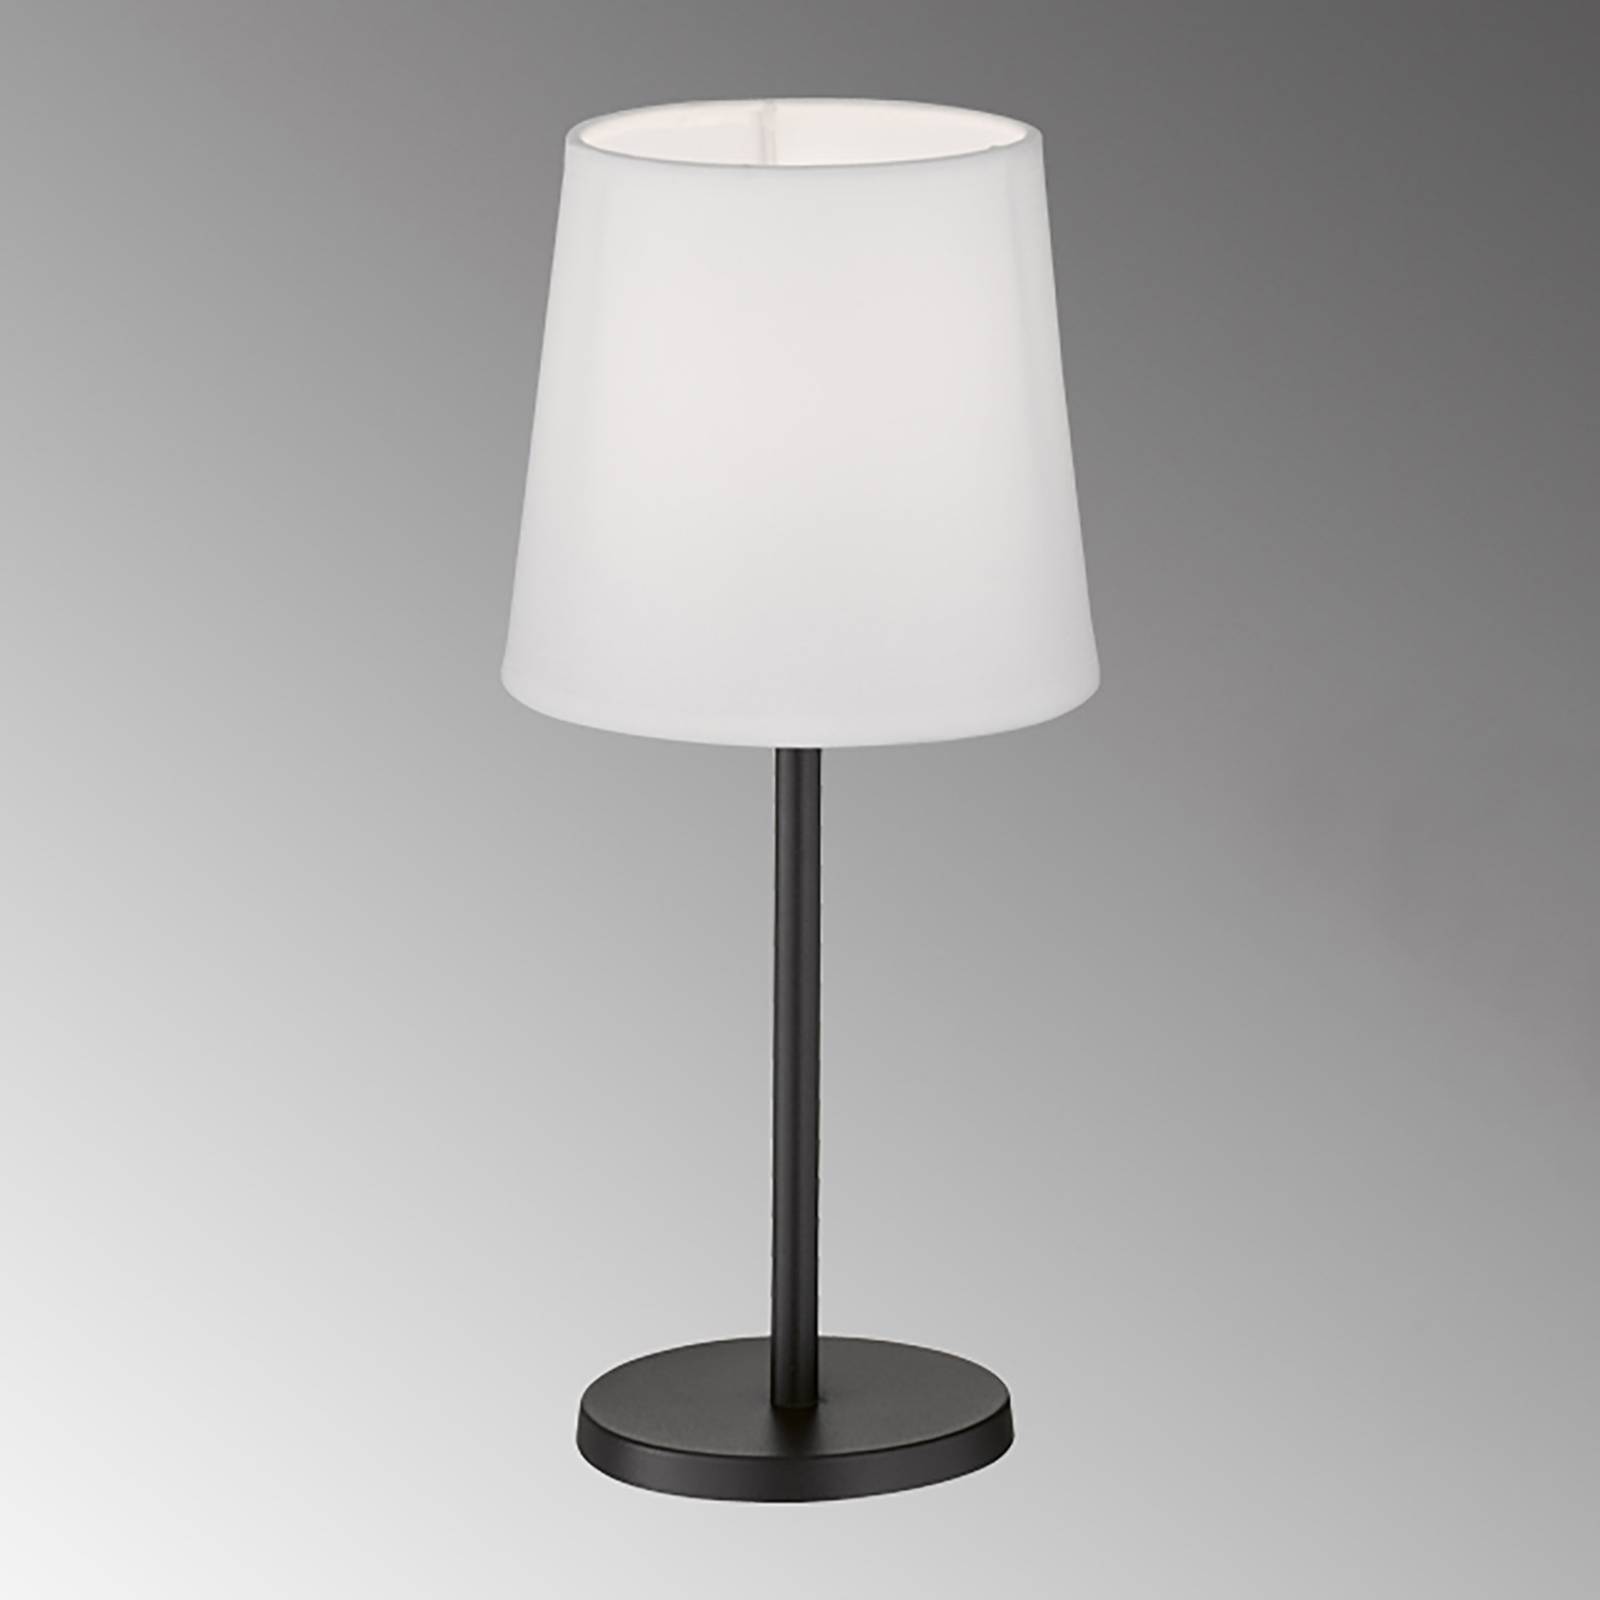 Image of FH Lighting Lampe à poser Eve, abat-jour tissu, noir/blanc 4052231501067